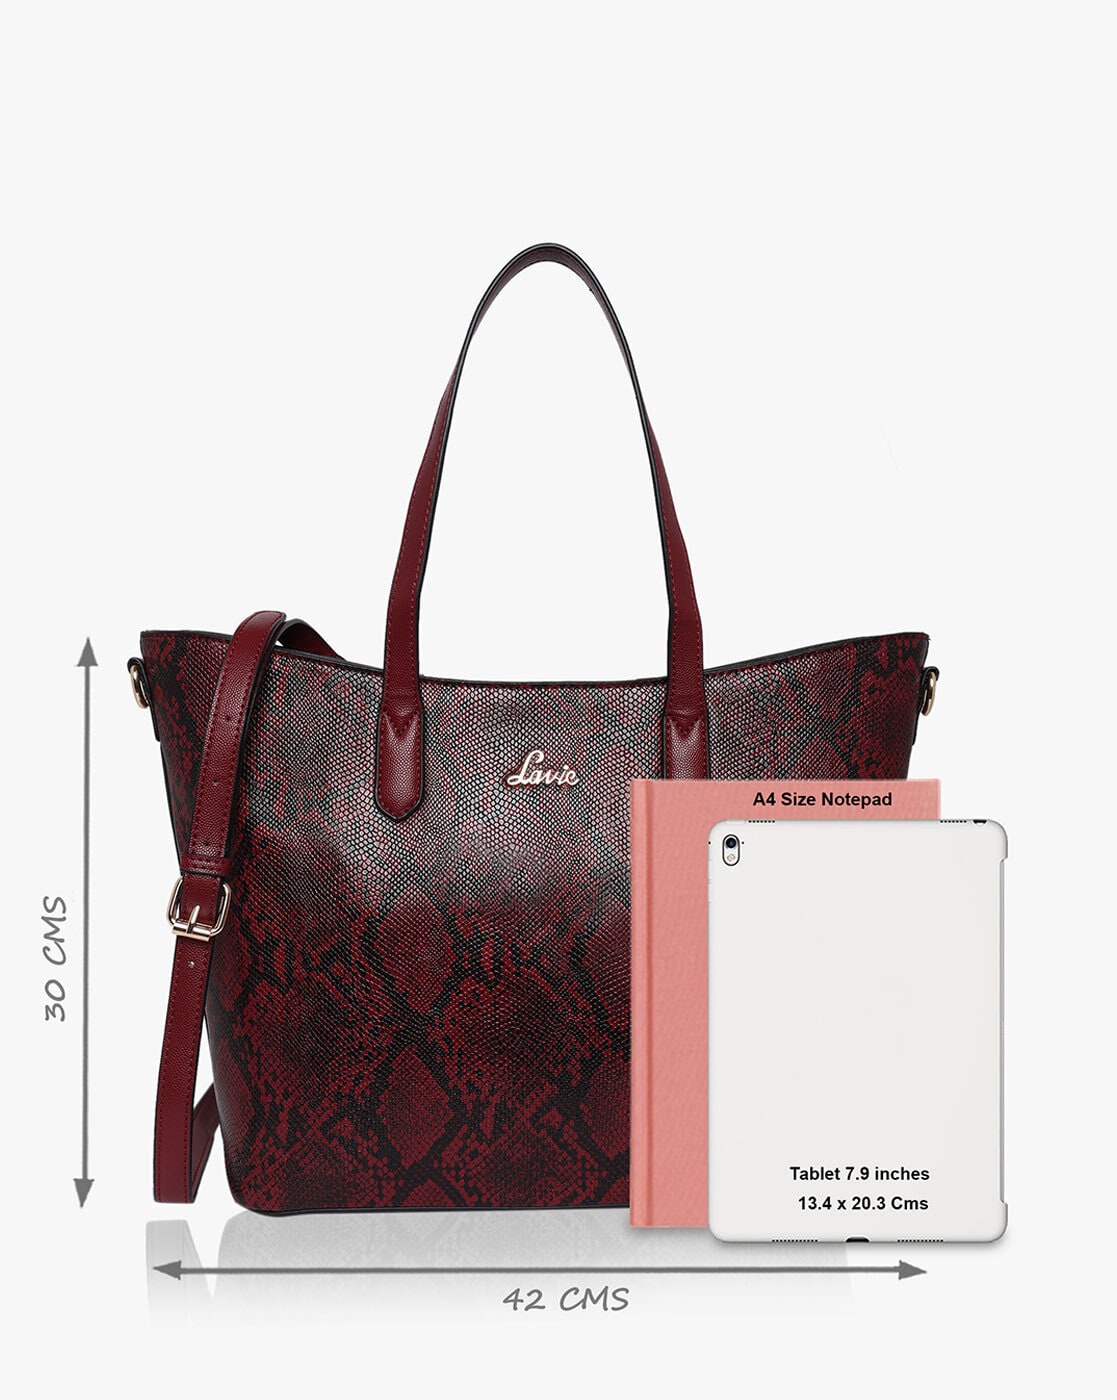 Monsoon Care Guide For Your Textured Lavie Handbags – Lavie World